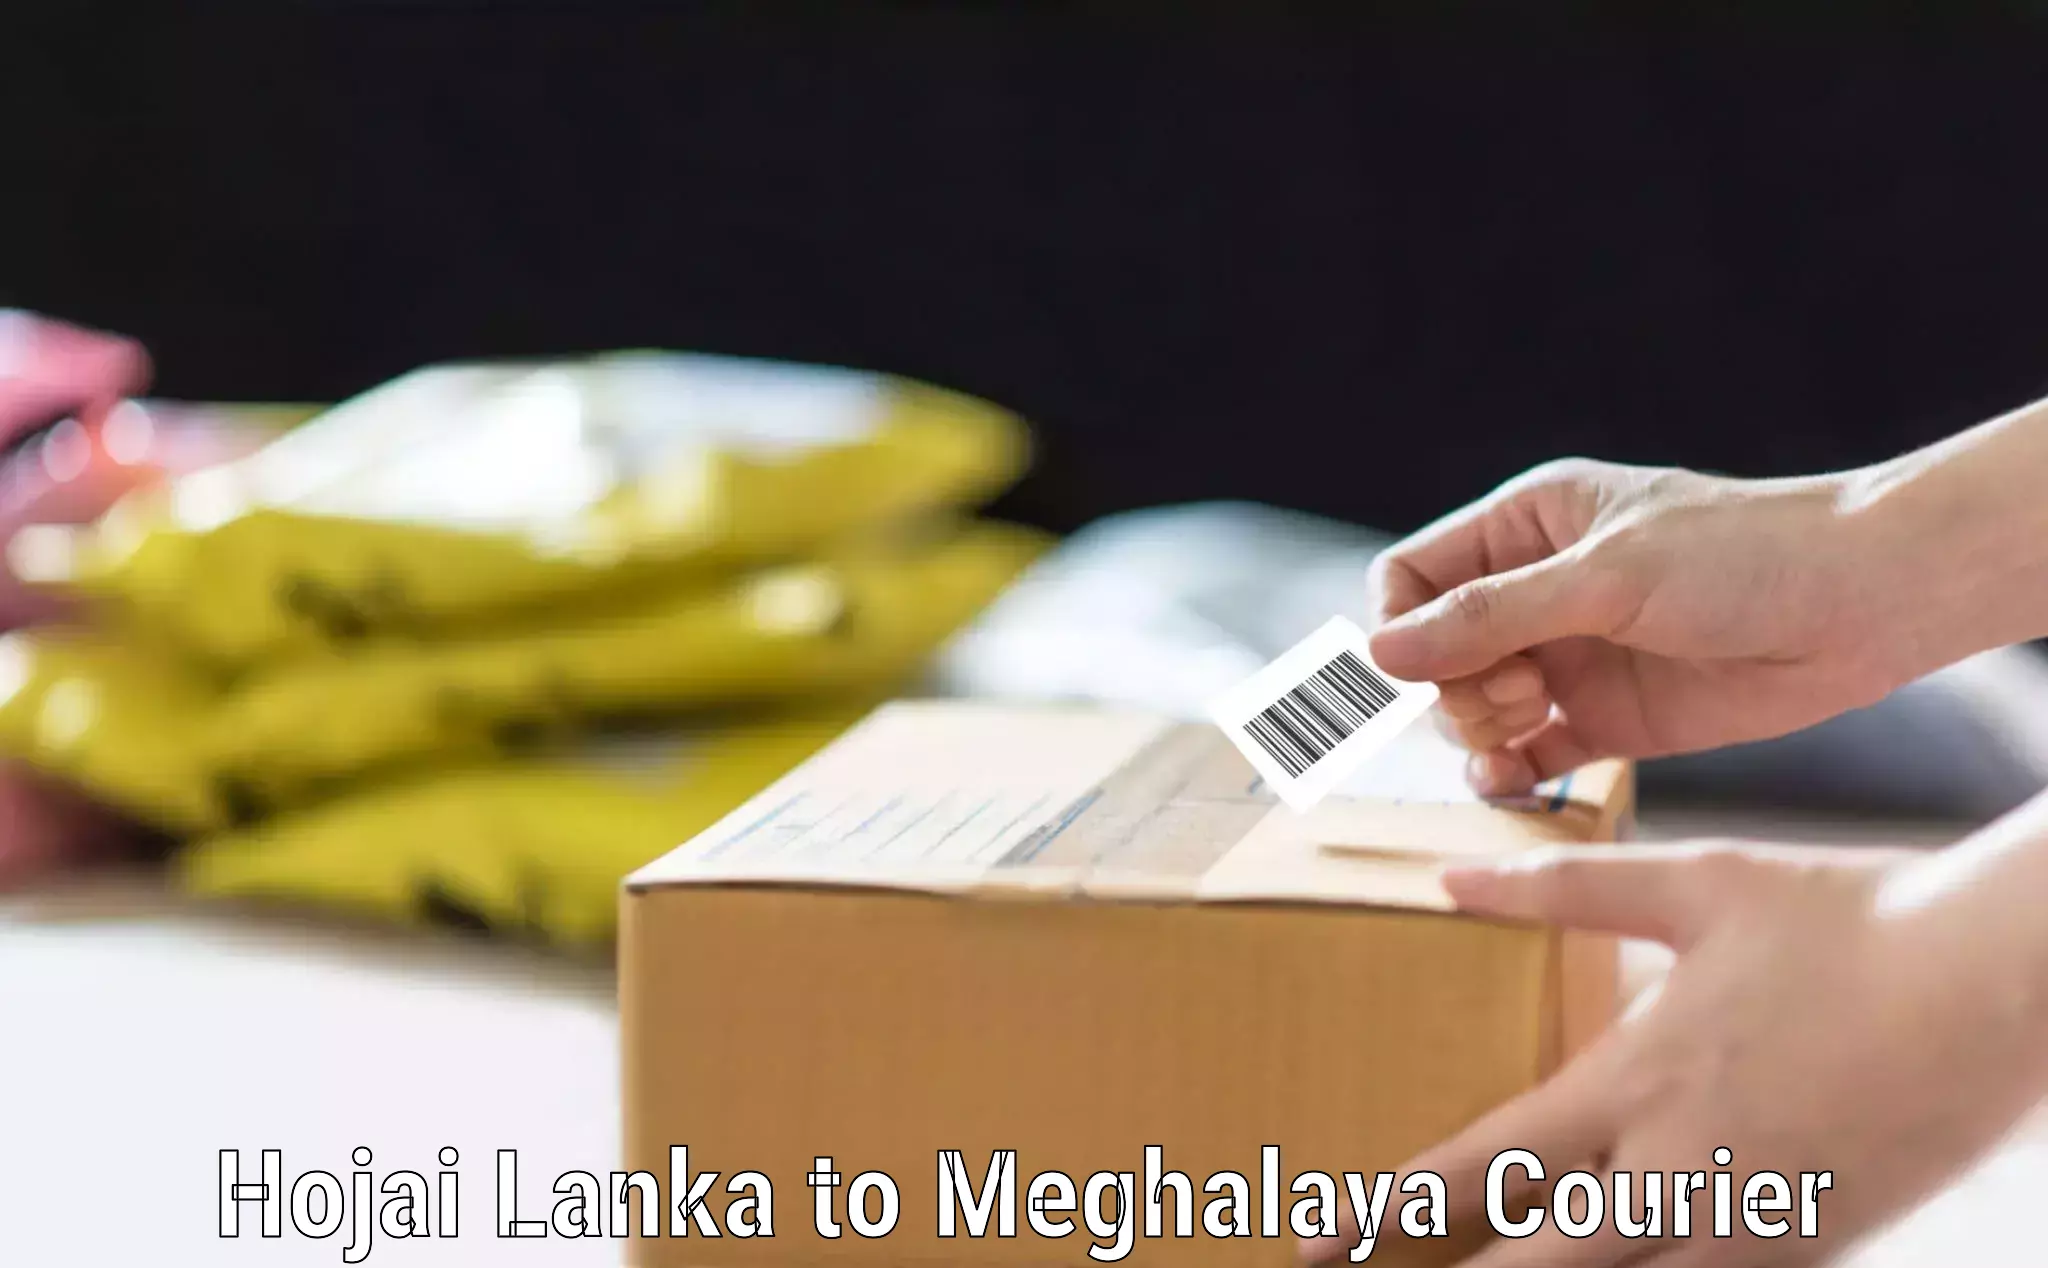 Hassle-free luggage shipping Hojai Lanka to Meghalaya